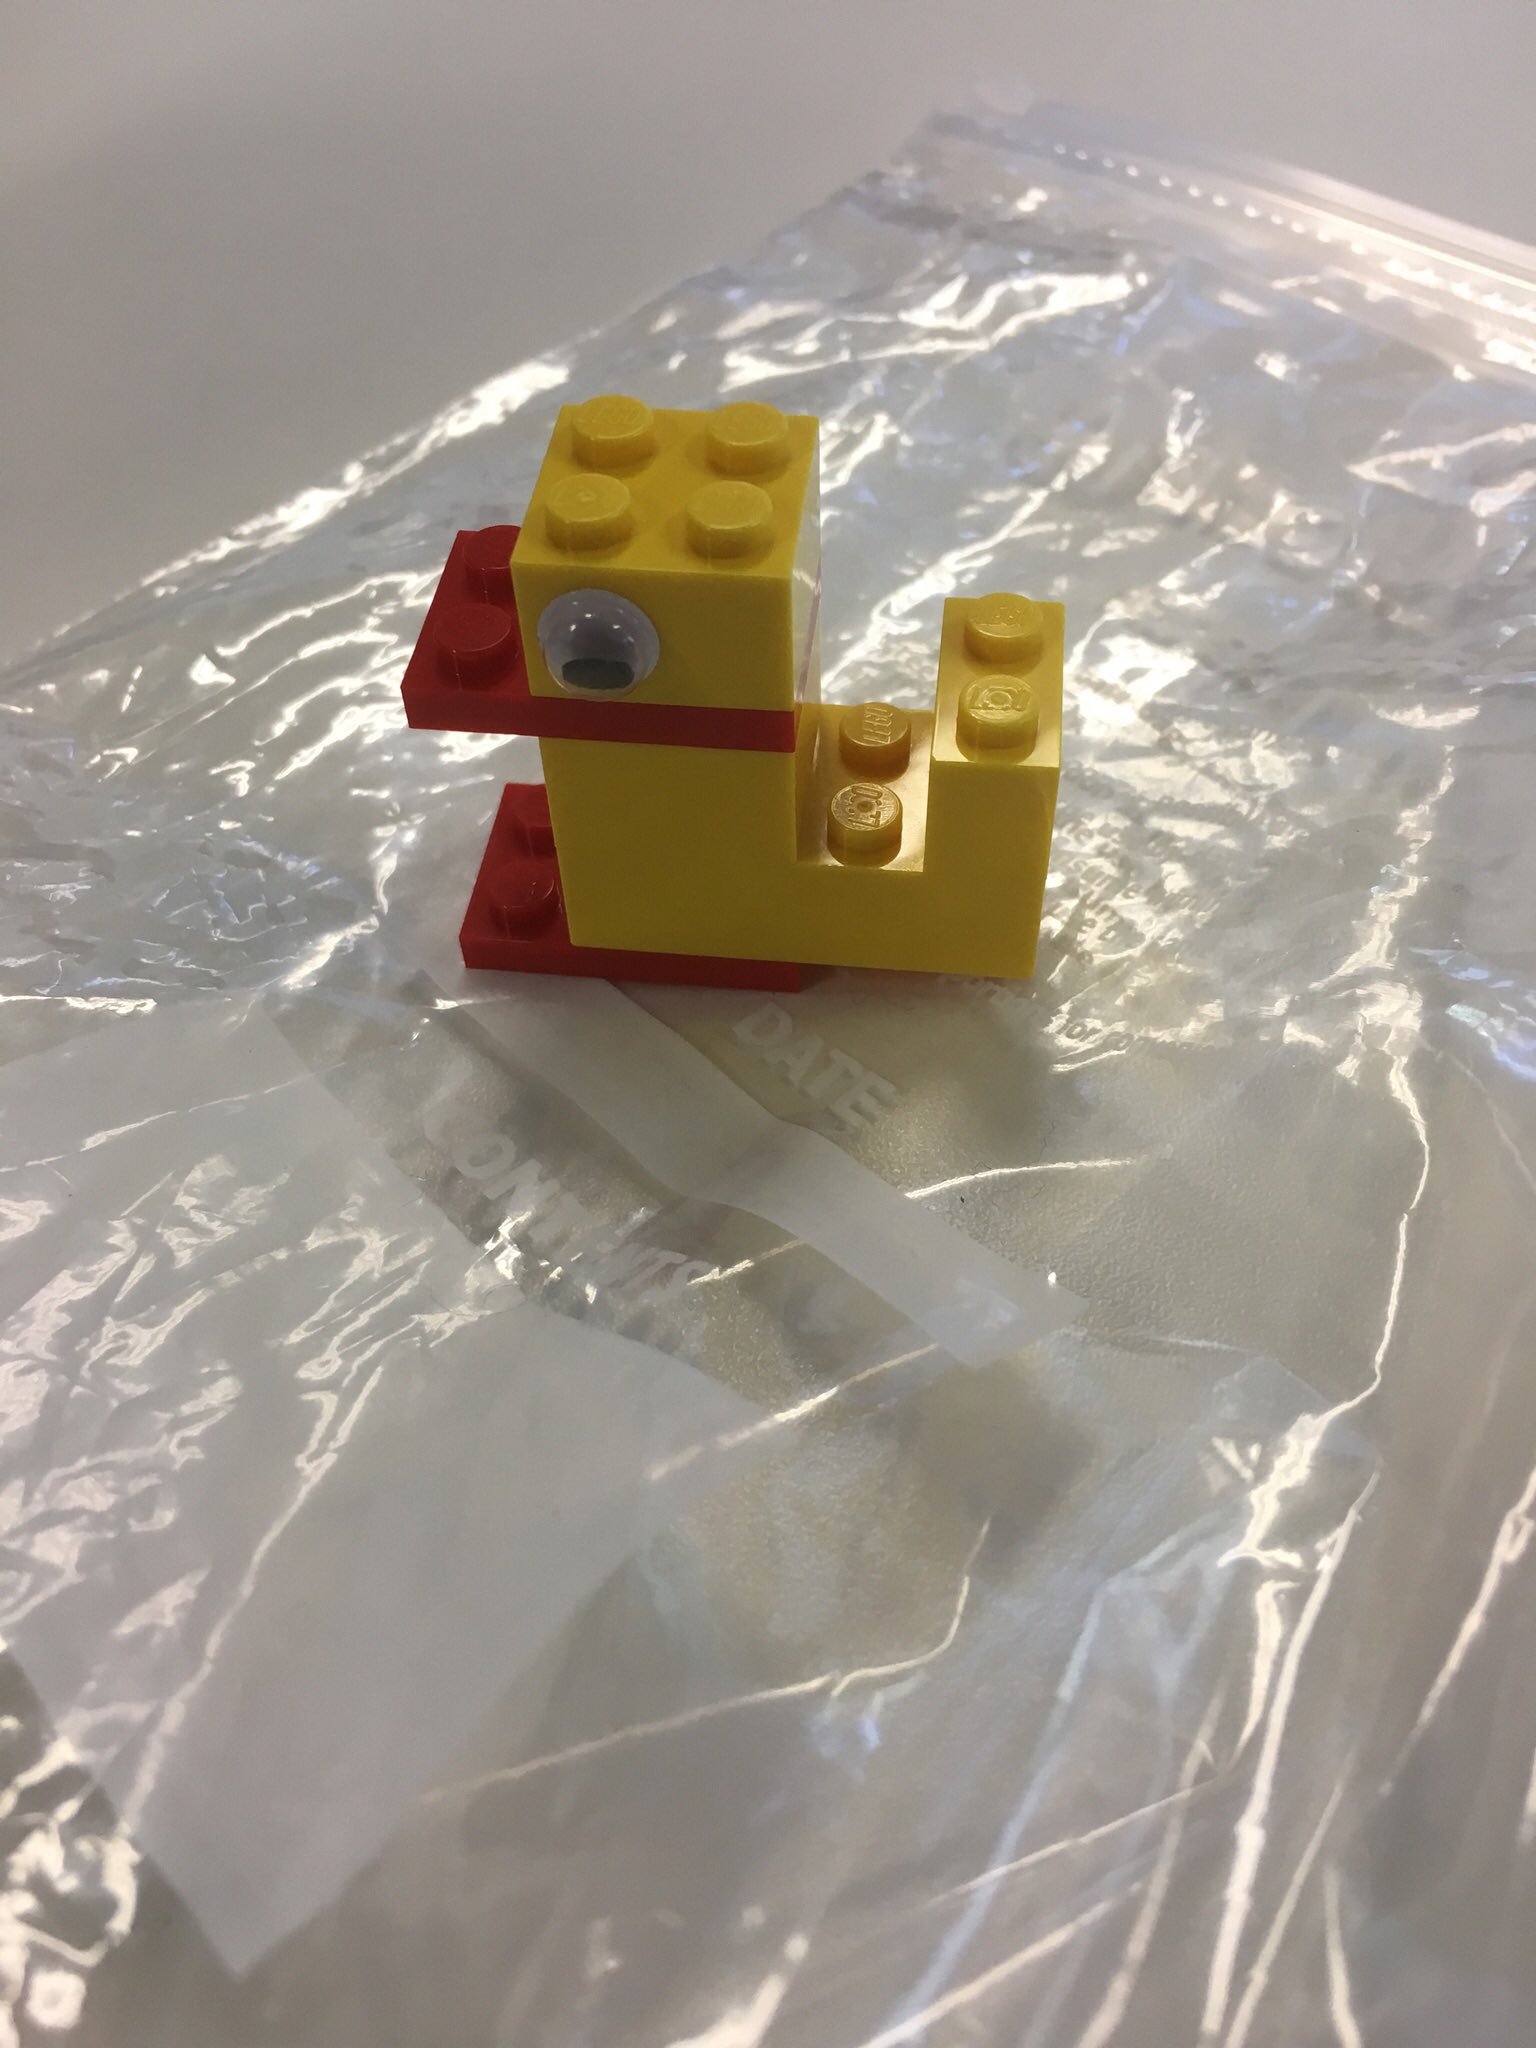 #SocMedHE17 it’s the Lego session! https://t.co/kBUq5r9LTv